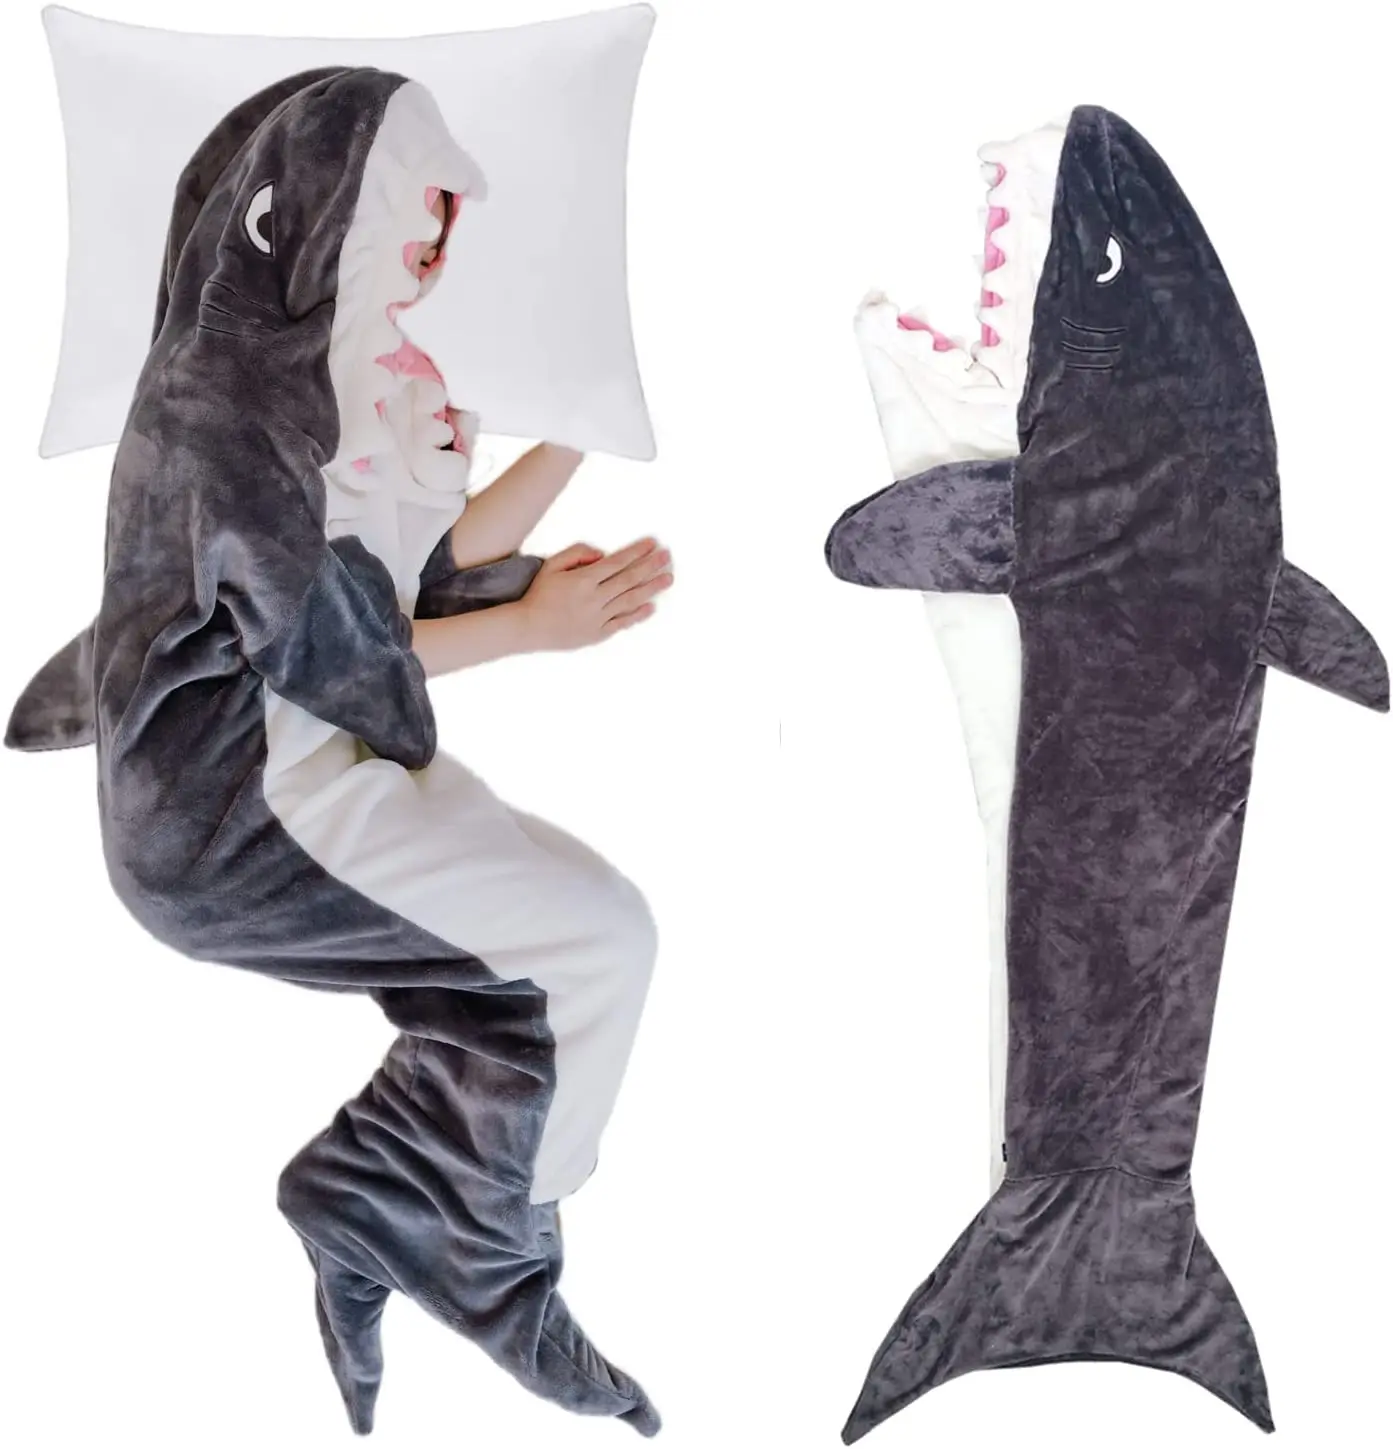 

Wholesale Soft Cozy Flannel Shark TV Blanket Wearable Shark Sleeping Bag Blanket Hooded Shark Costume for Adult Women Men Gifts